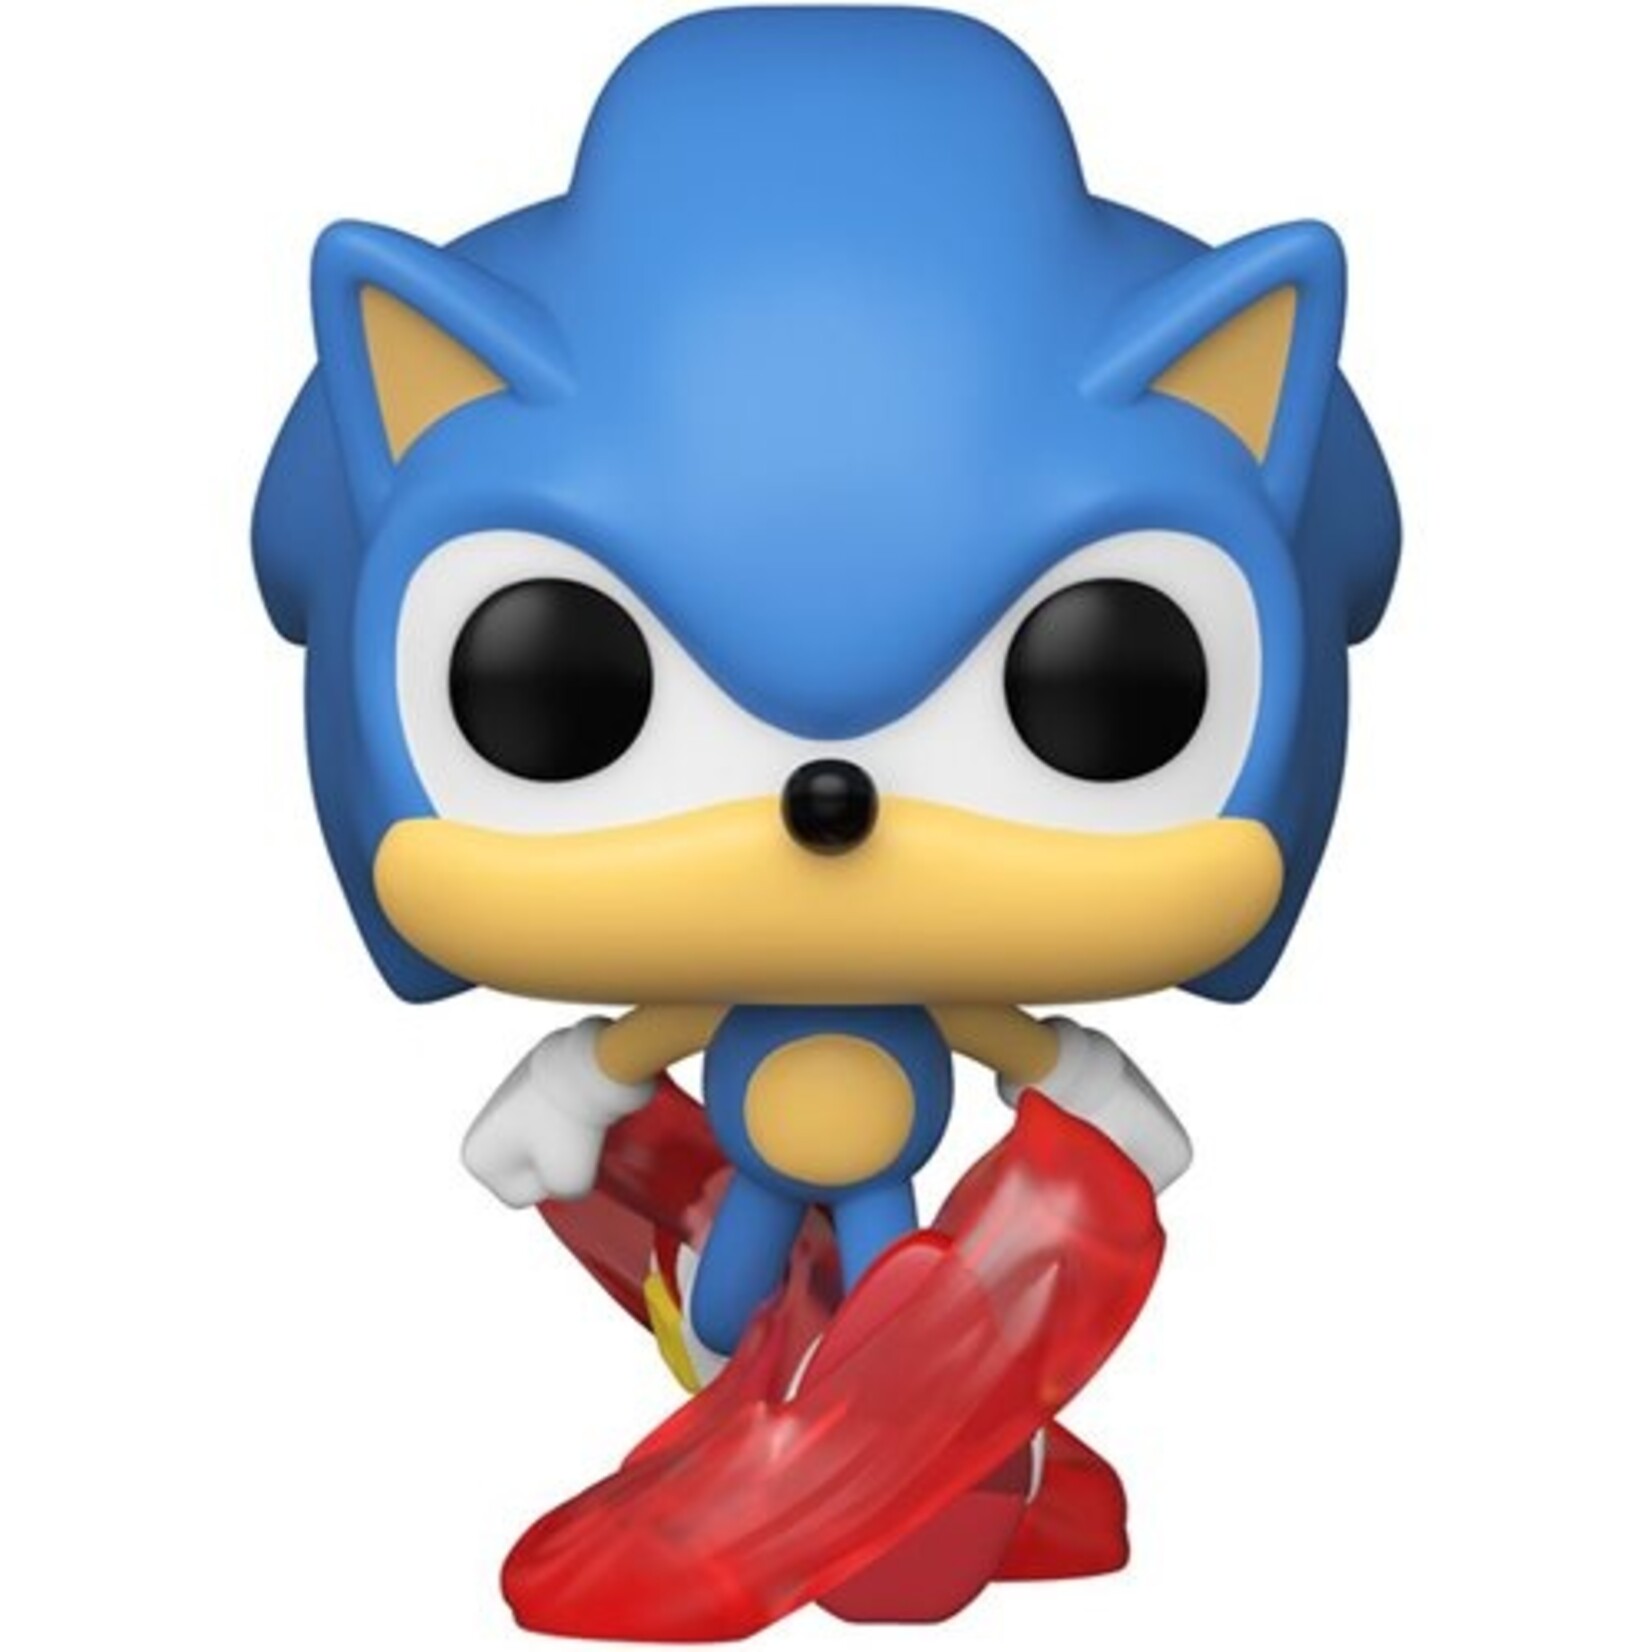 Funko Funko POP! Classic Sonic the Hedgehog #632